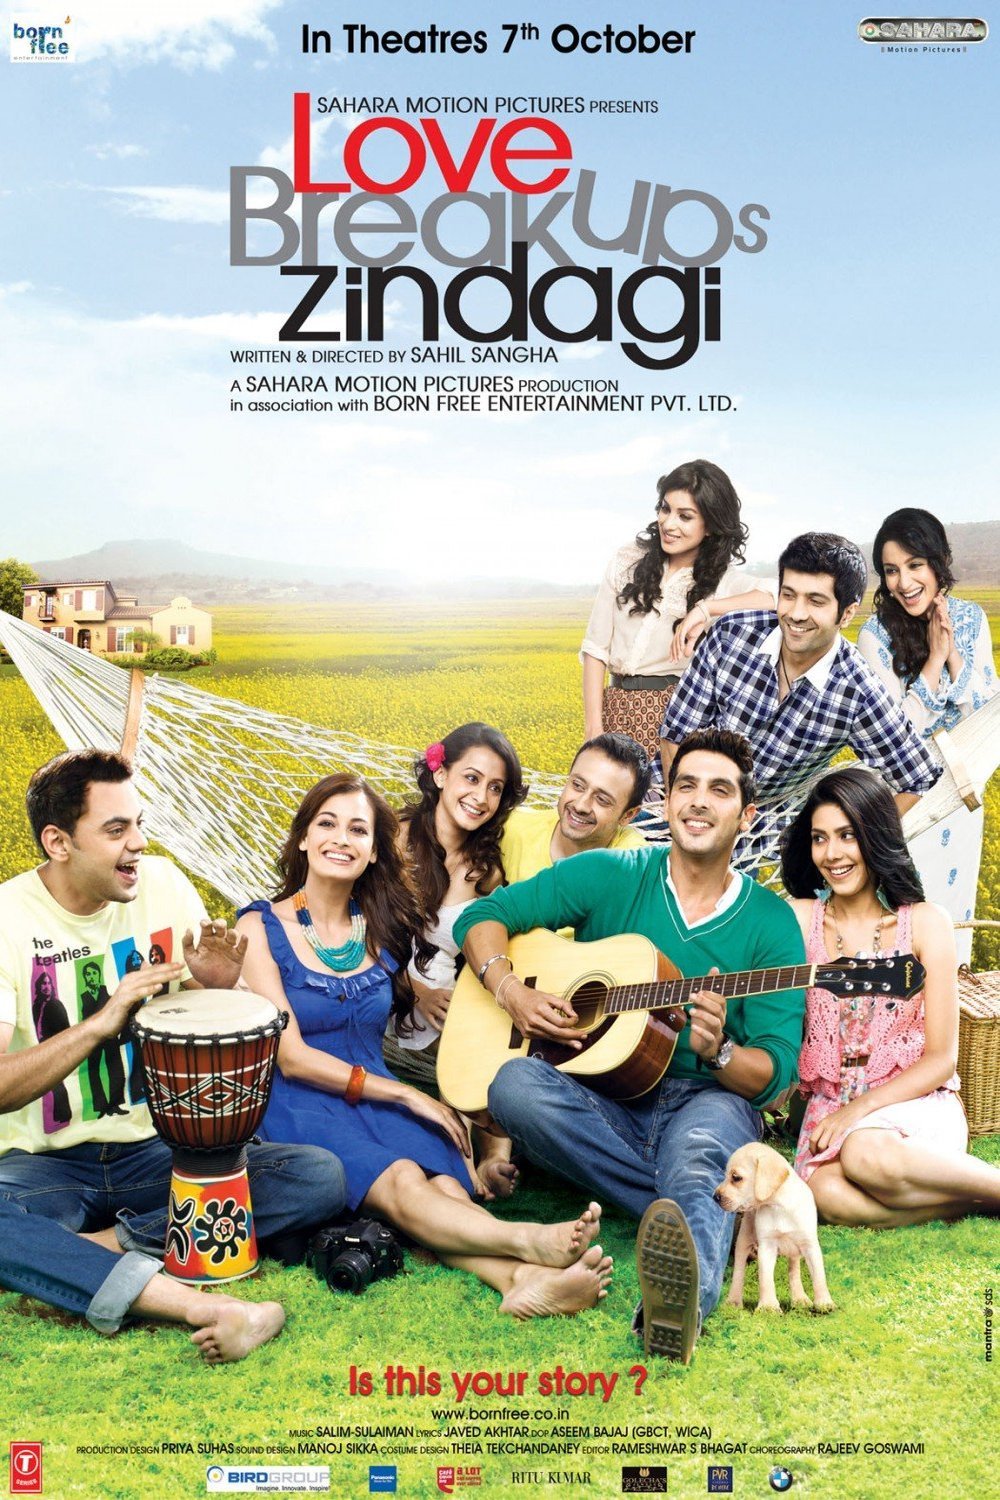 Hindi poster of the movie Love Breakups Zindagi